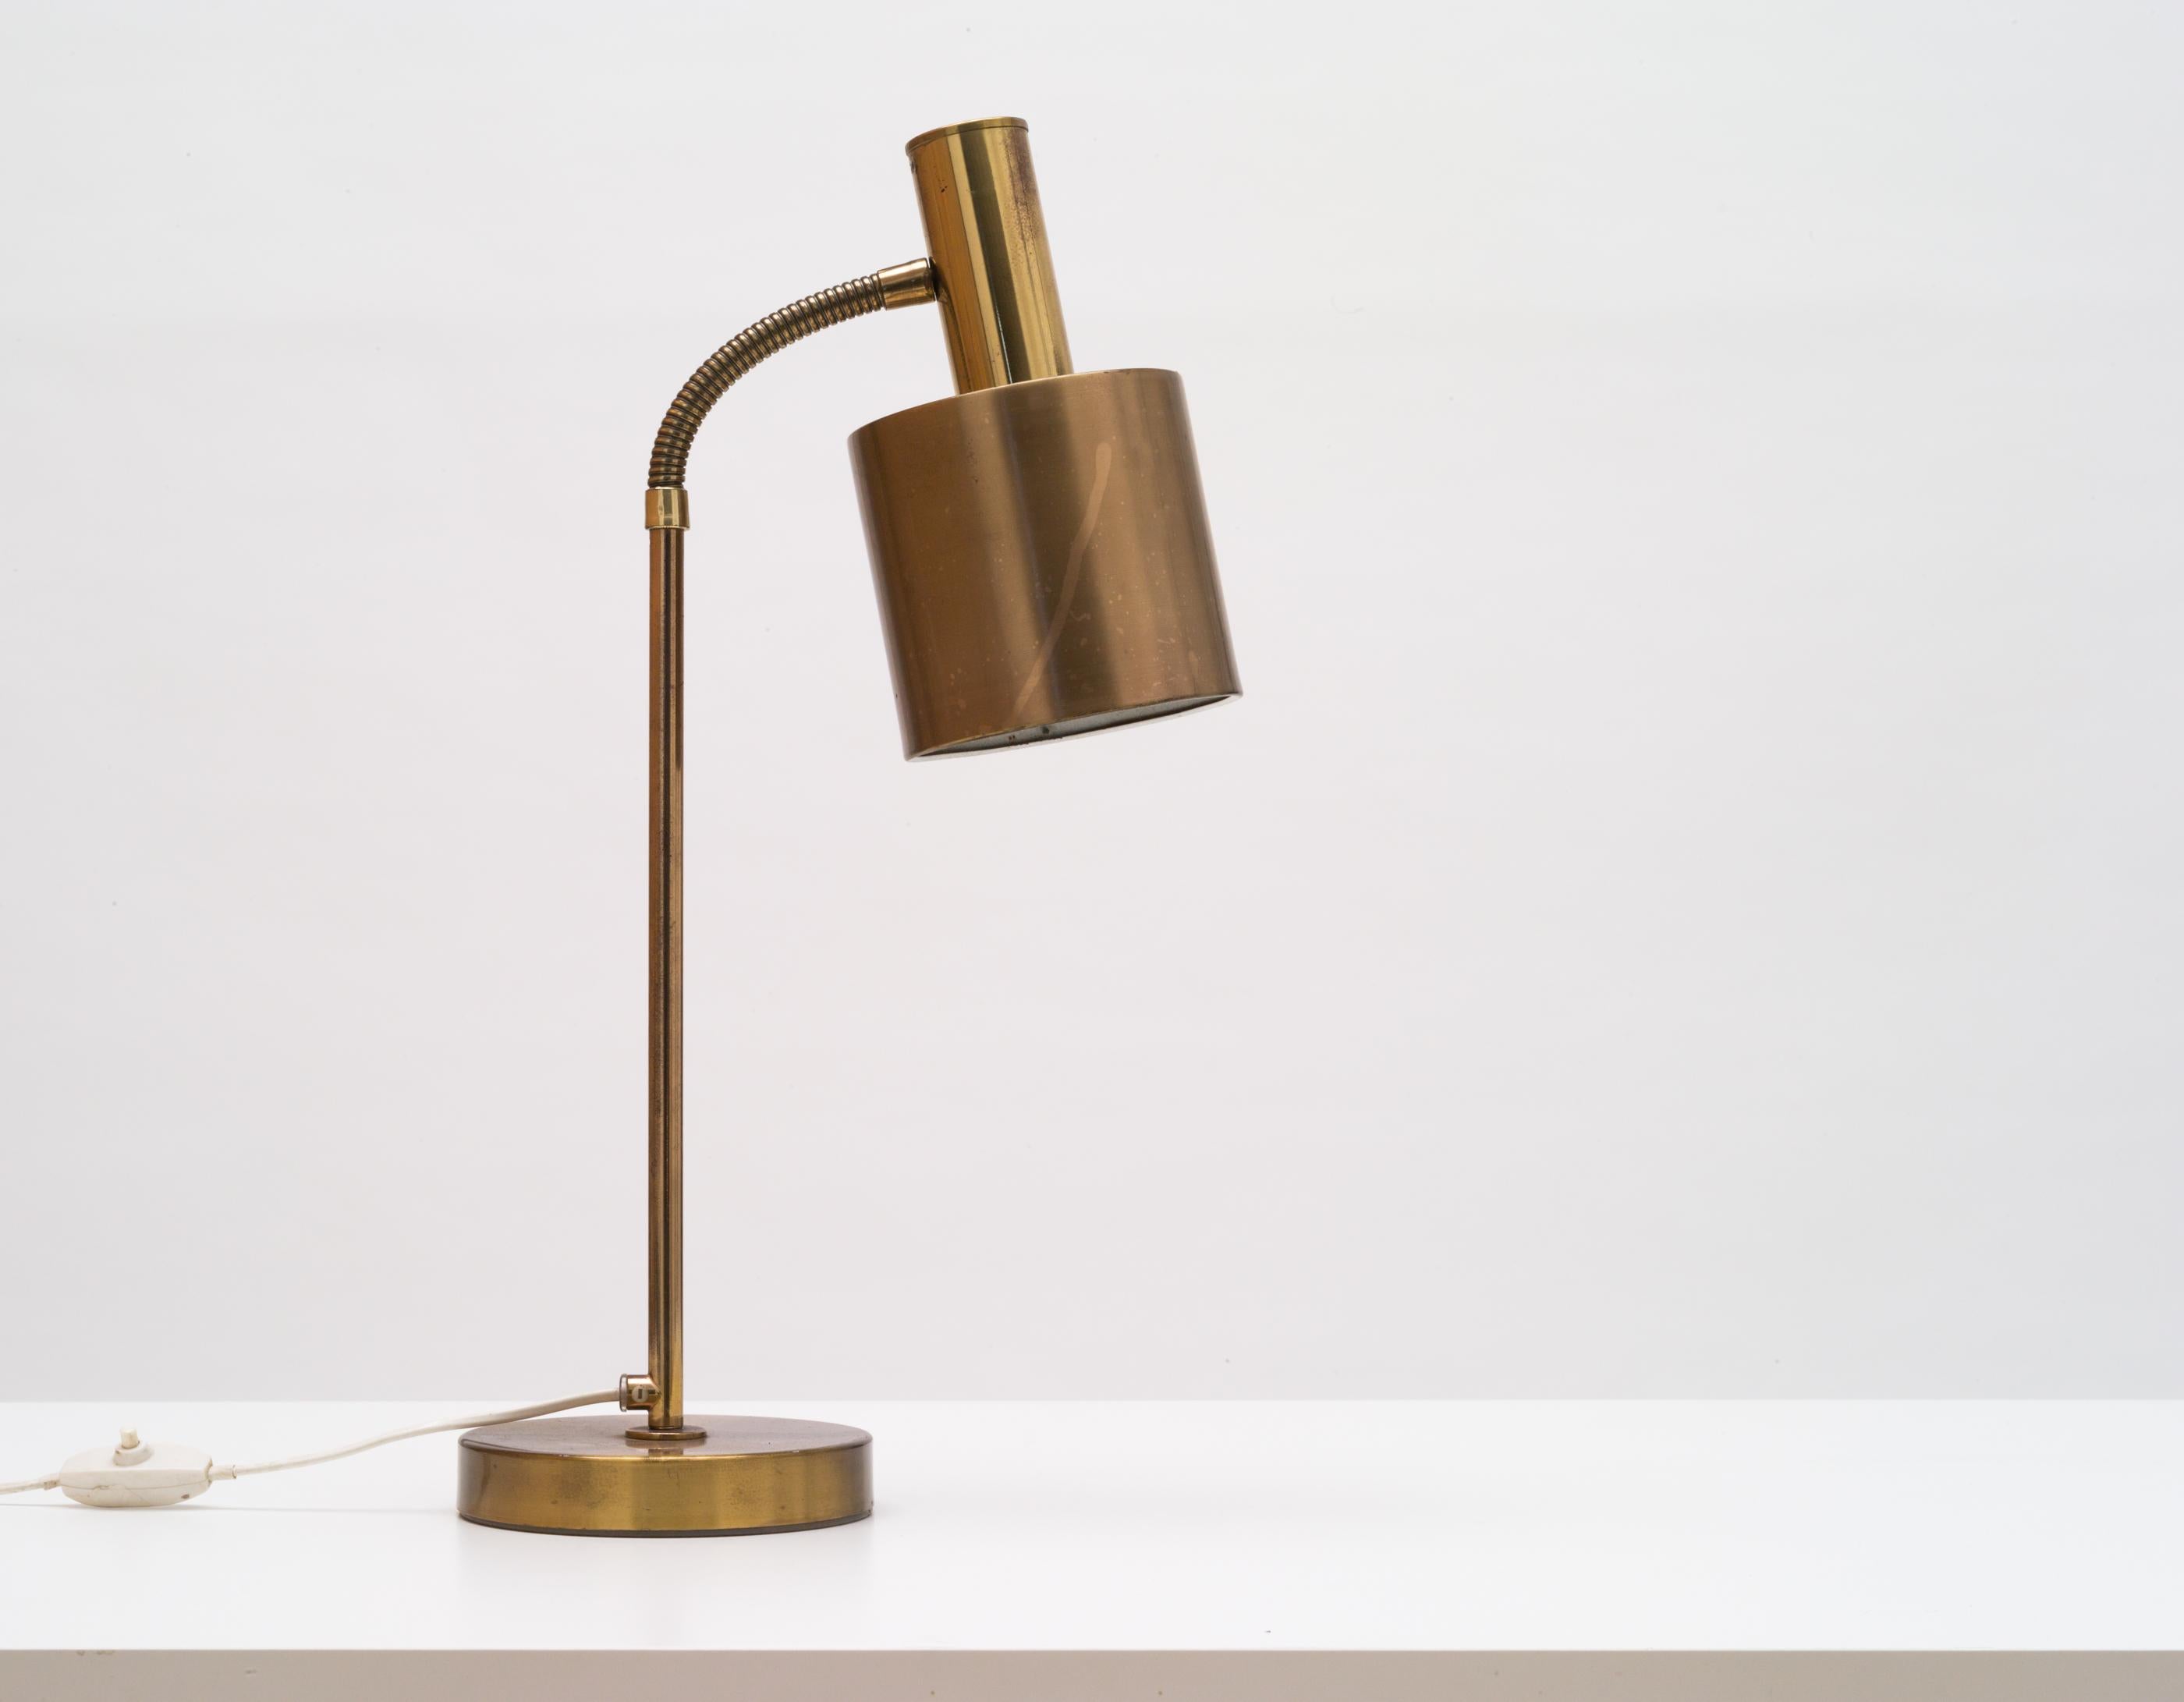 Brass table/reading lamp produced by Tyringe Konsthantverk, Sweden 1960s.